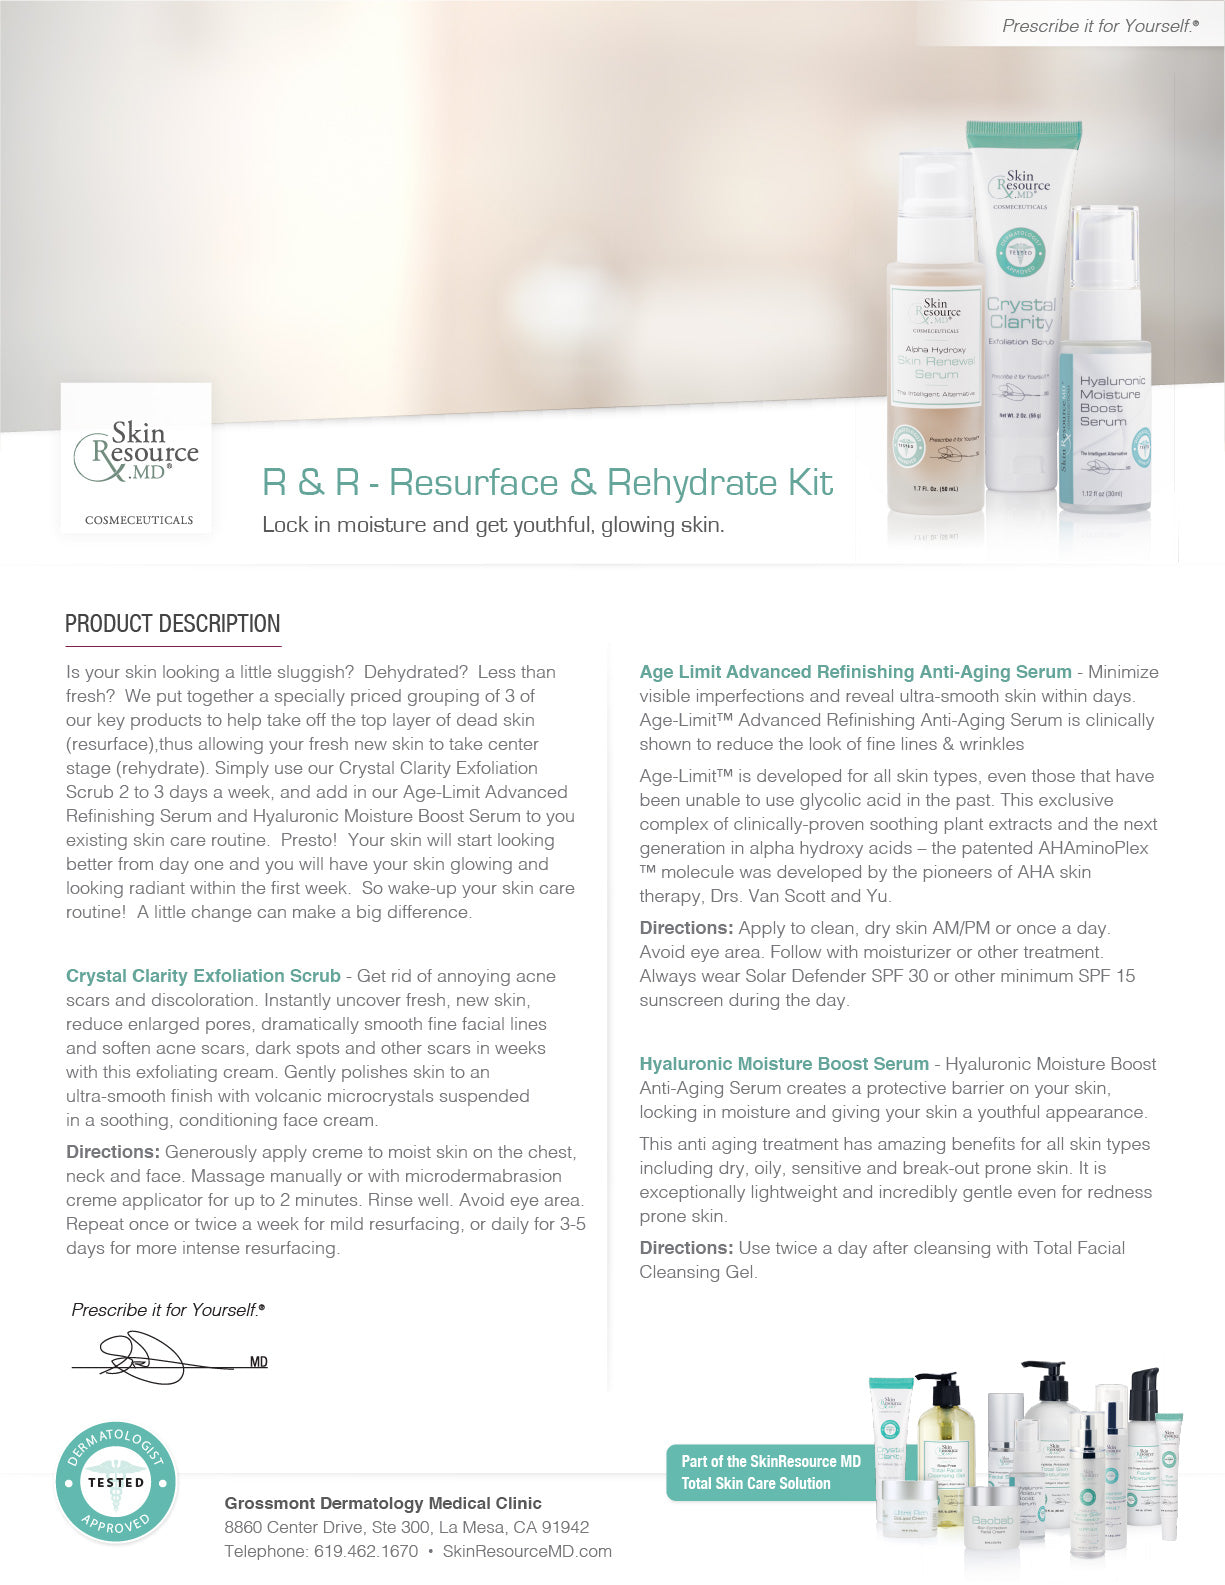 R & R - Resurface & Rehydrate Kit